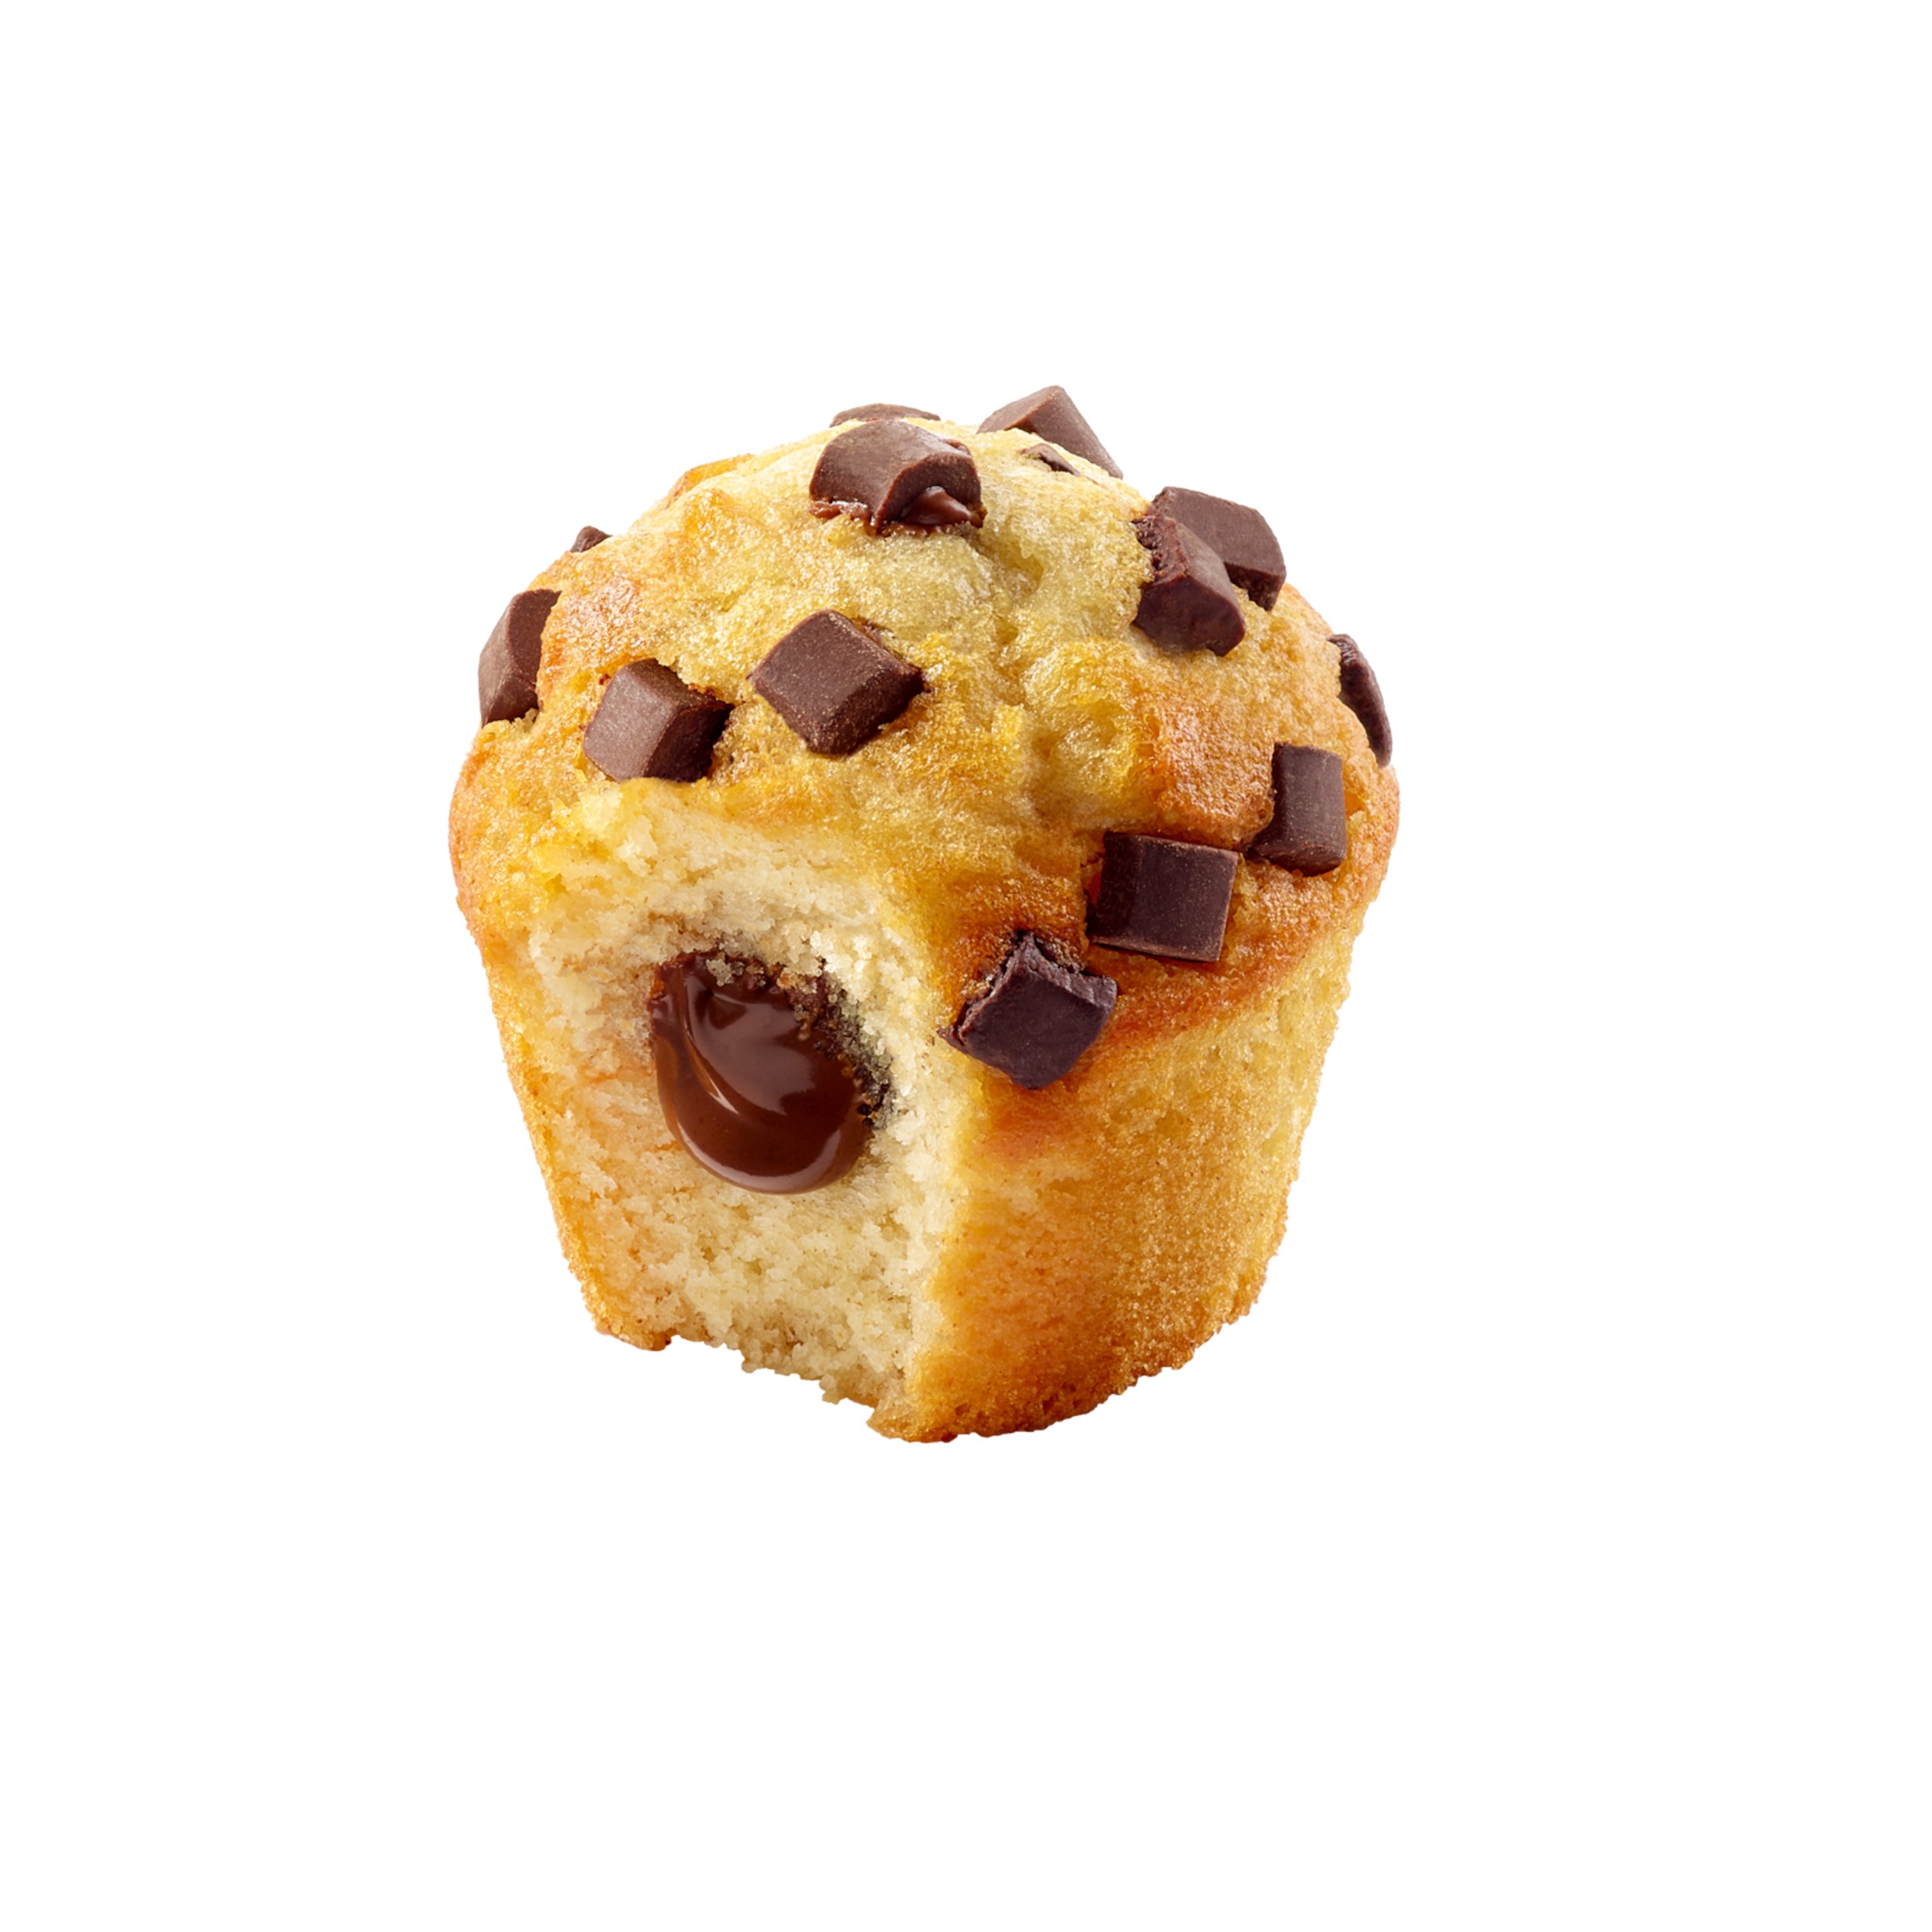 Mes Muffins Nature Coeur Pâte à tartiner & Eclats de Chocolat | Ker Cadélac